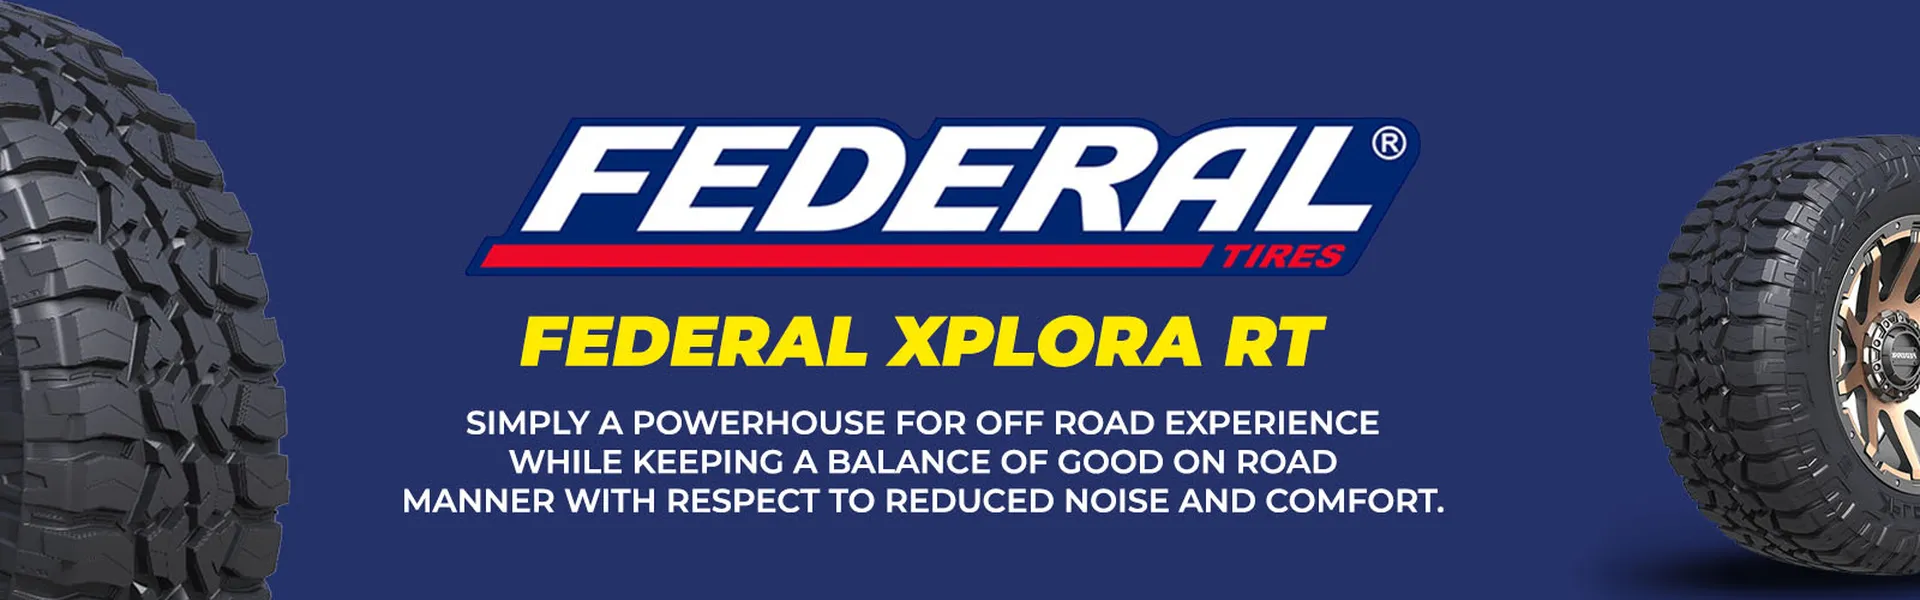 IPAD Size Federal Xplora RT